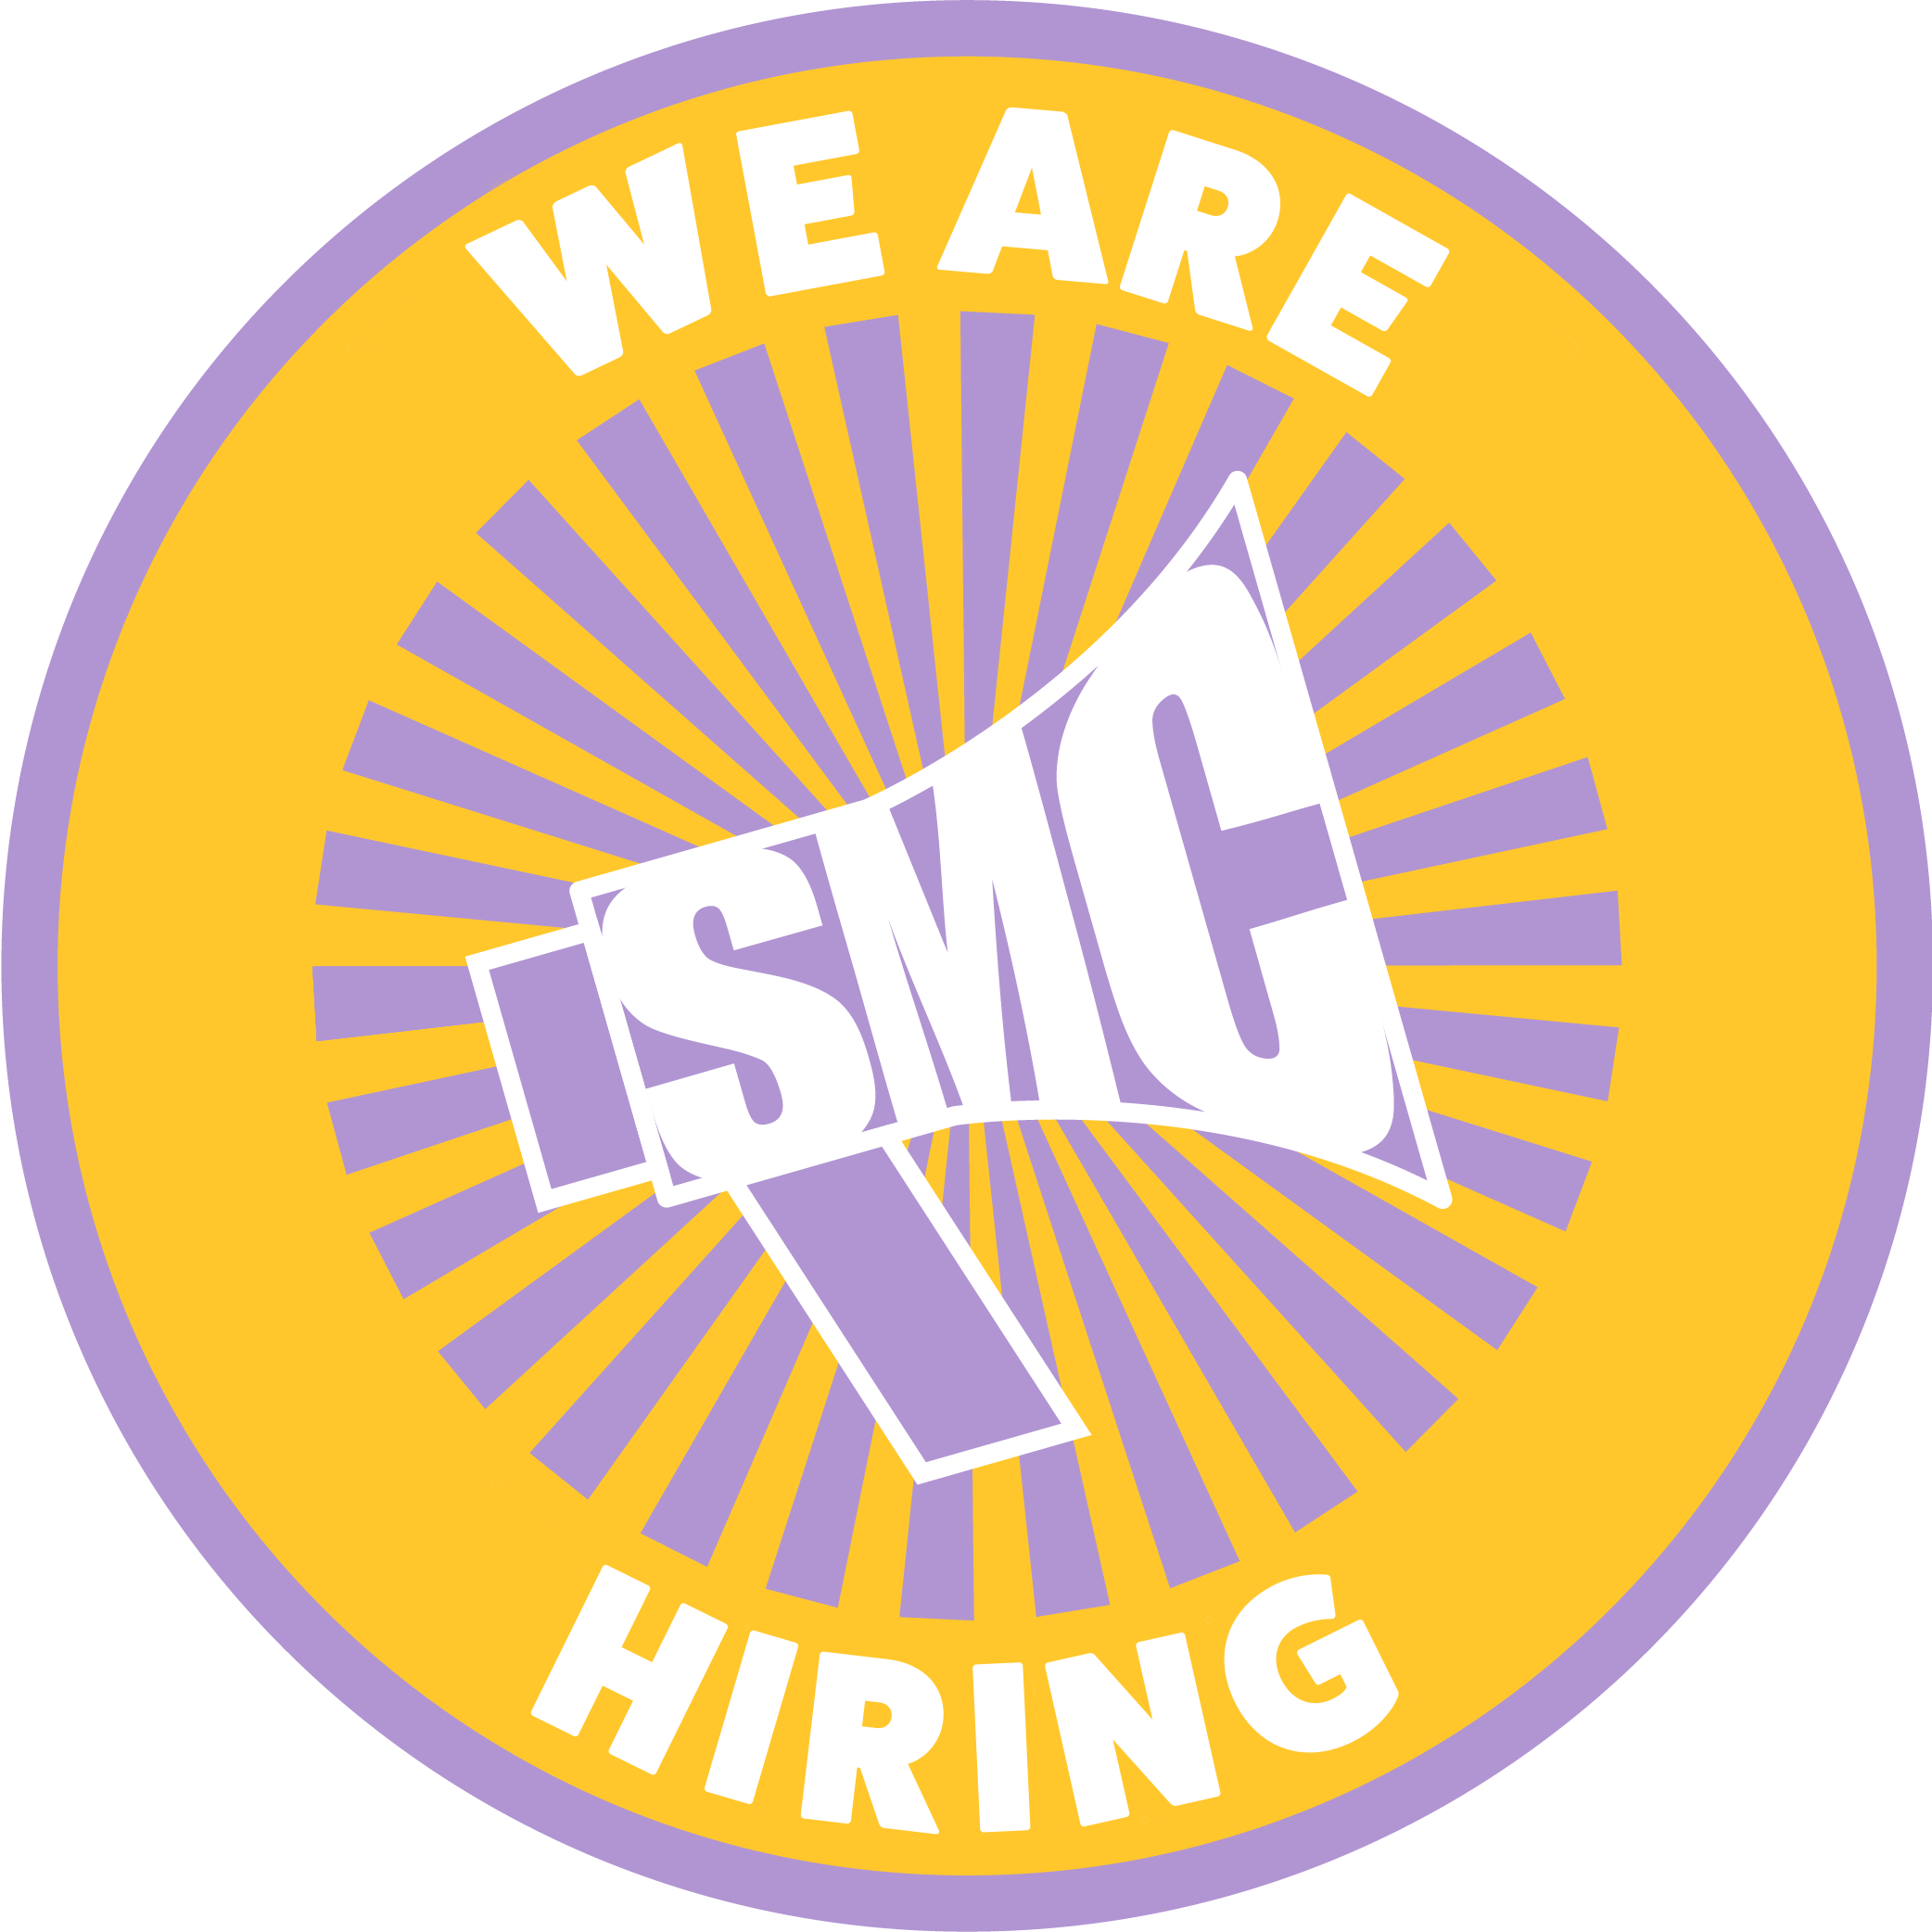 SMC We Are Hiring logo.